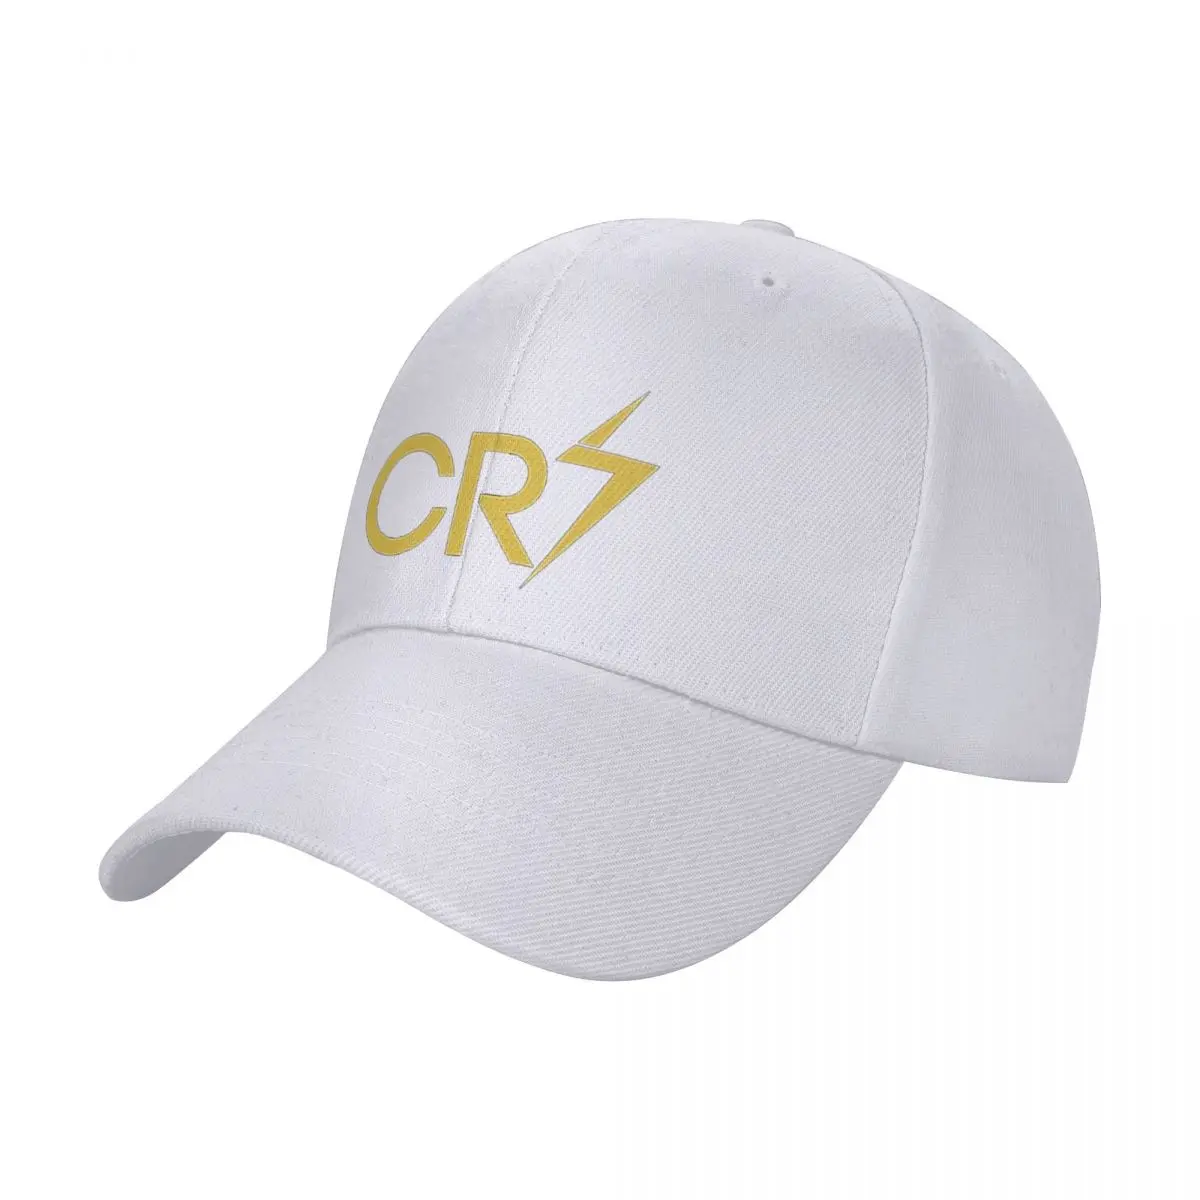 CR7 Cristiano Ronaldo Sepci de Baseball Snapback Moda Pălării de Baseball Respirabil Casual în aer liber Unisex Personalizate Policromie . ' - ' . 5